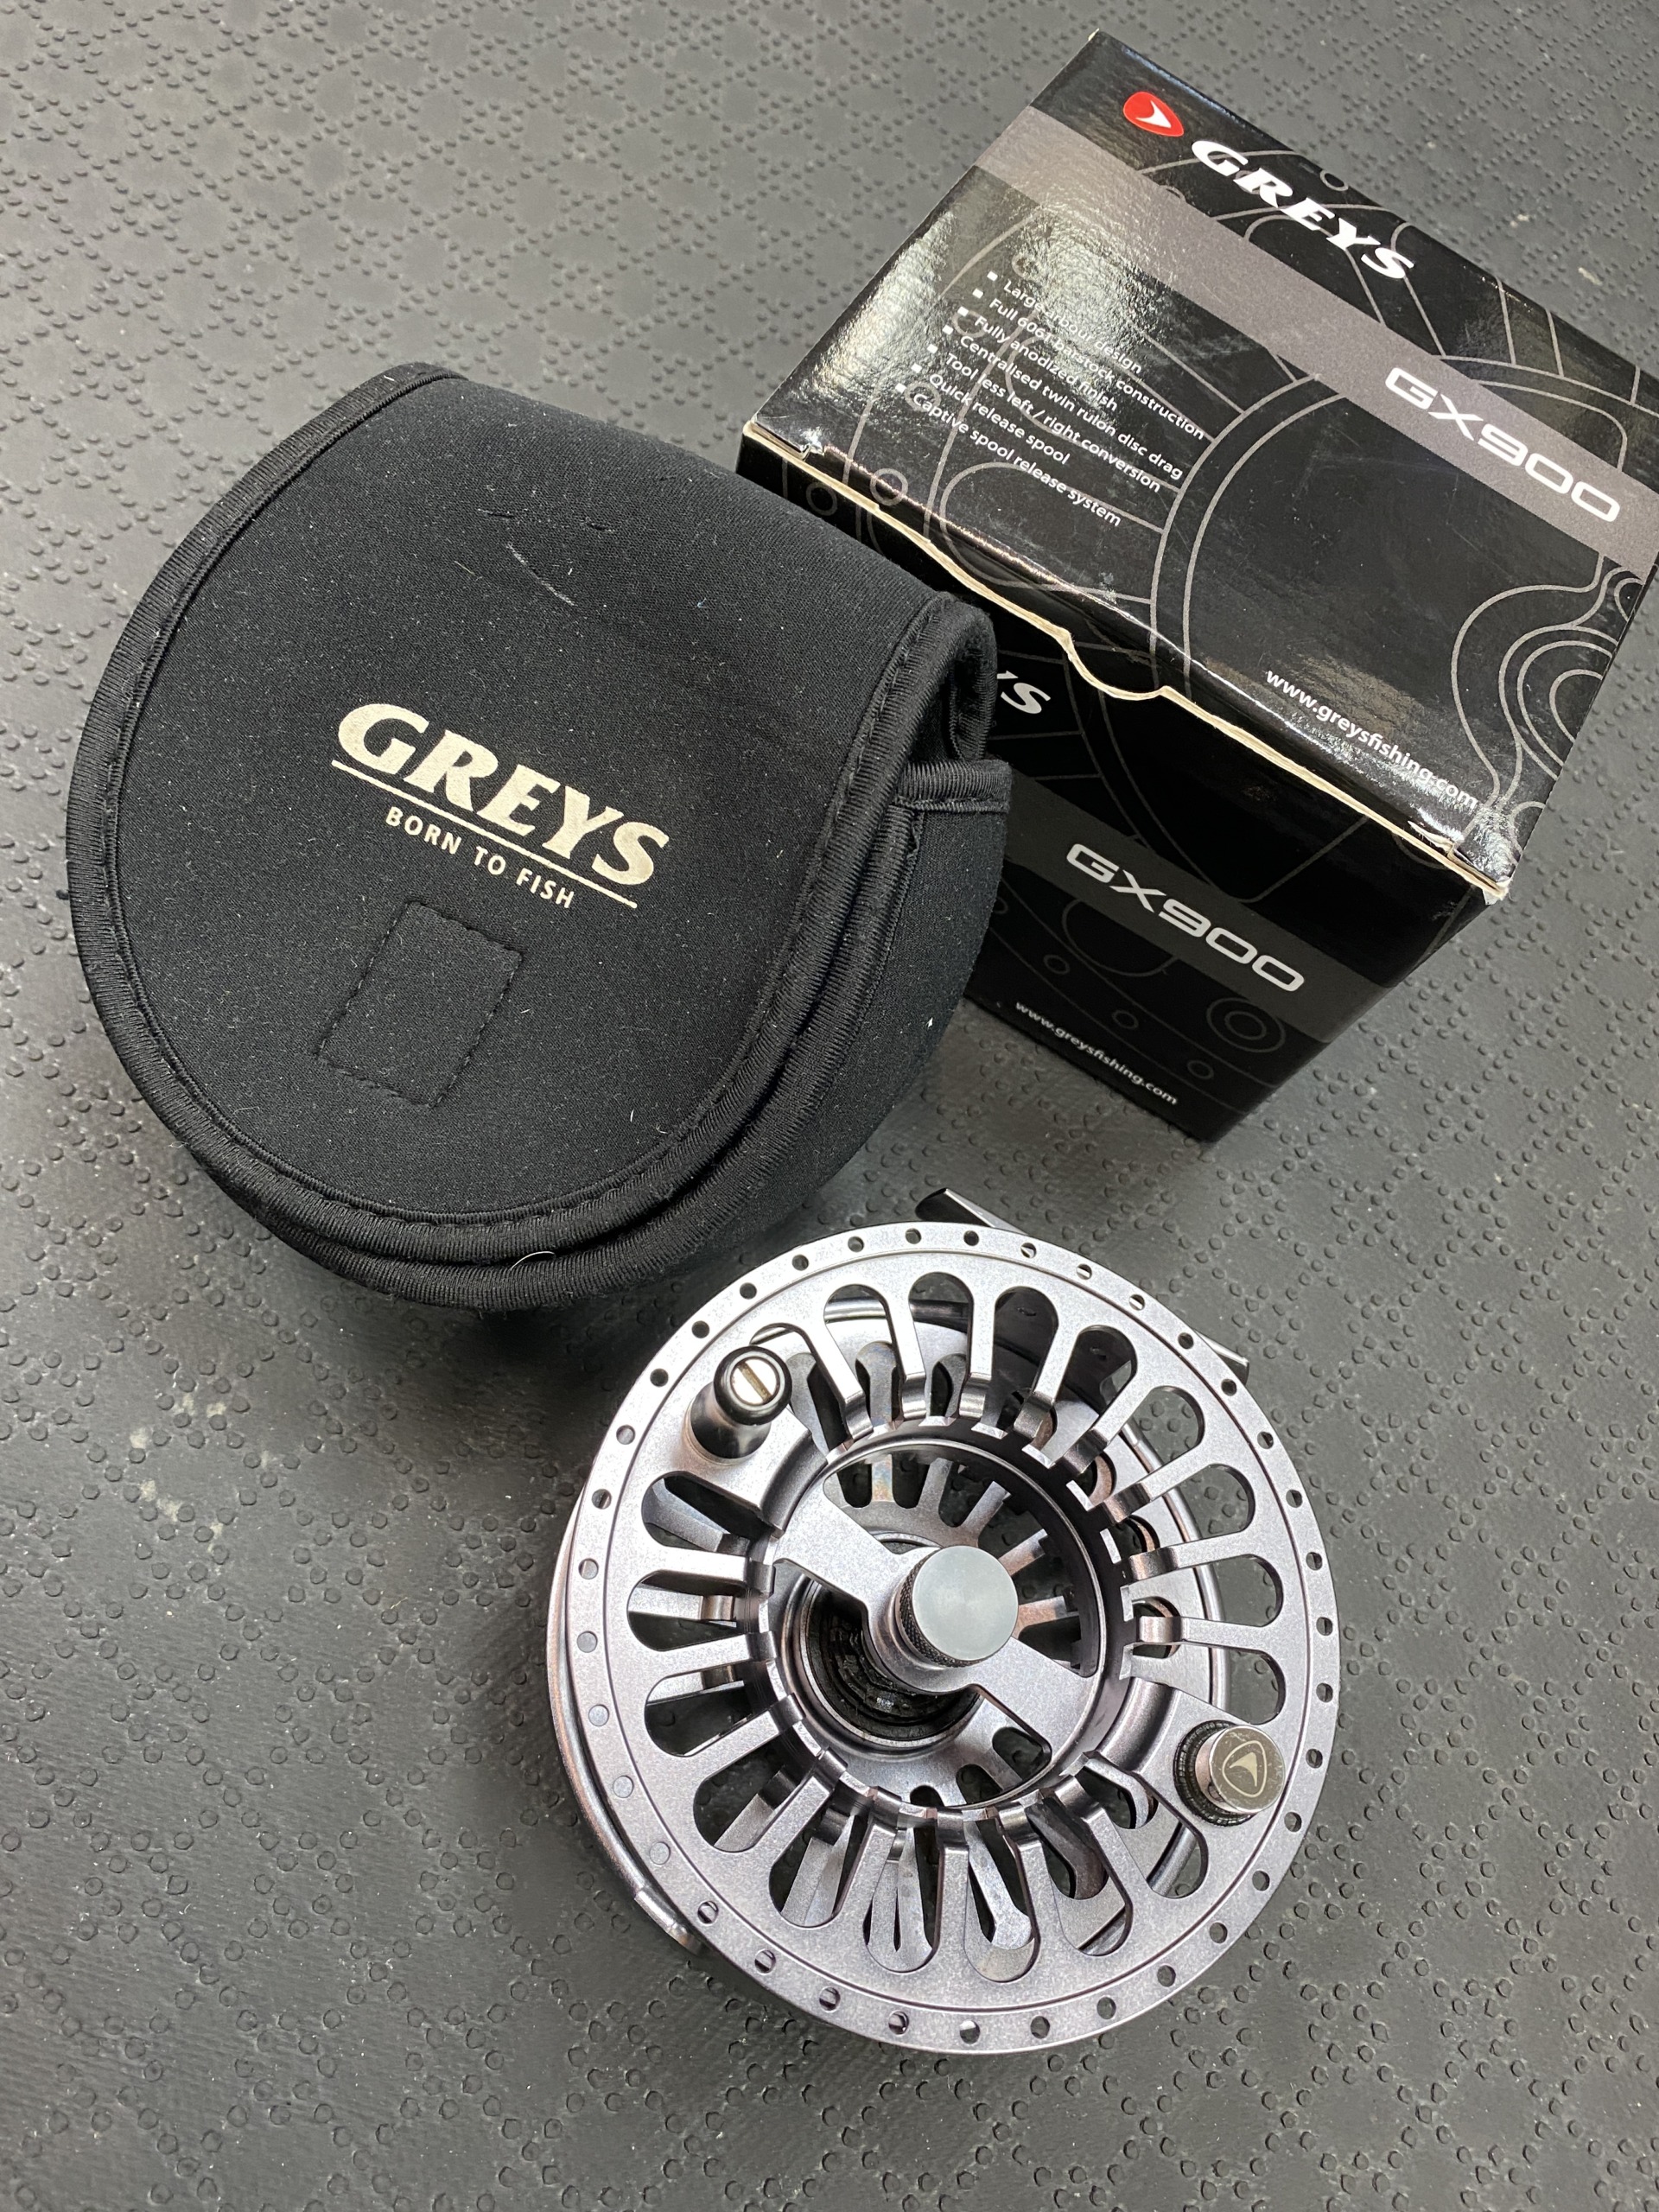 Greys - GX900 SPEY Reel - LIKE NEW! - $150